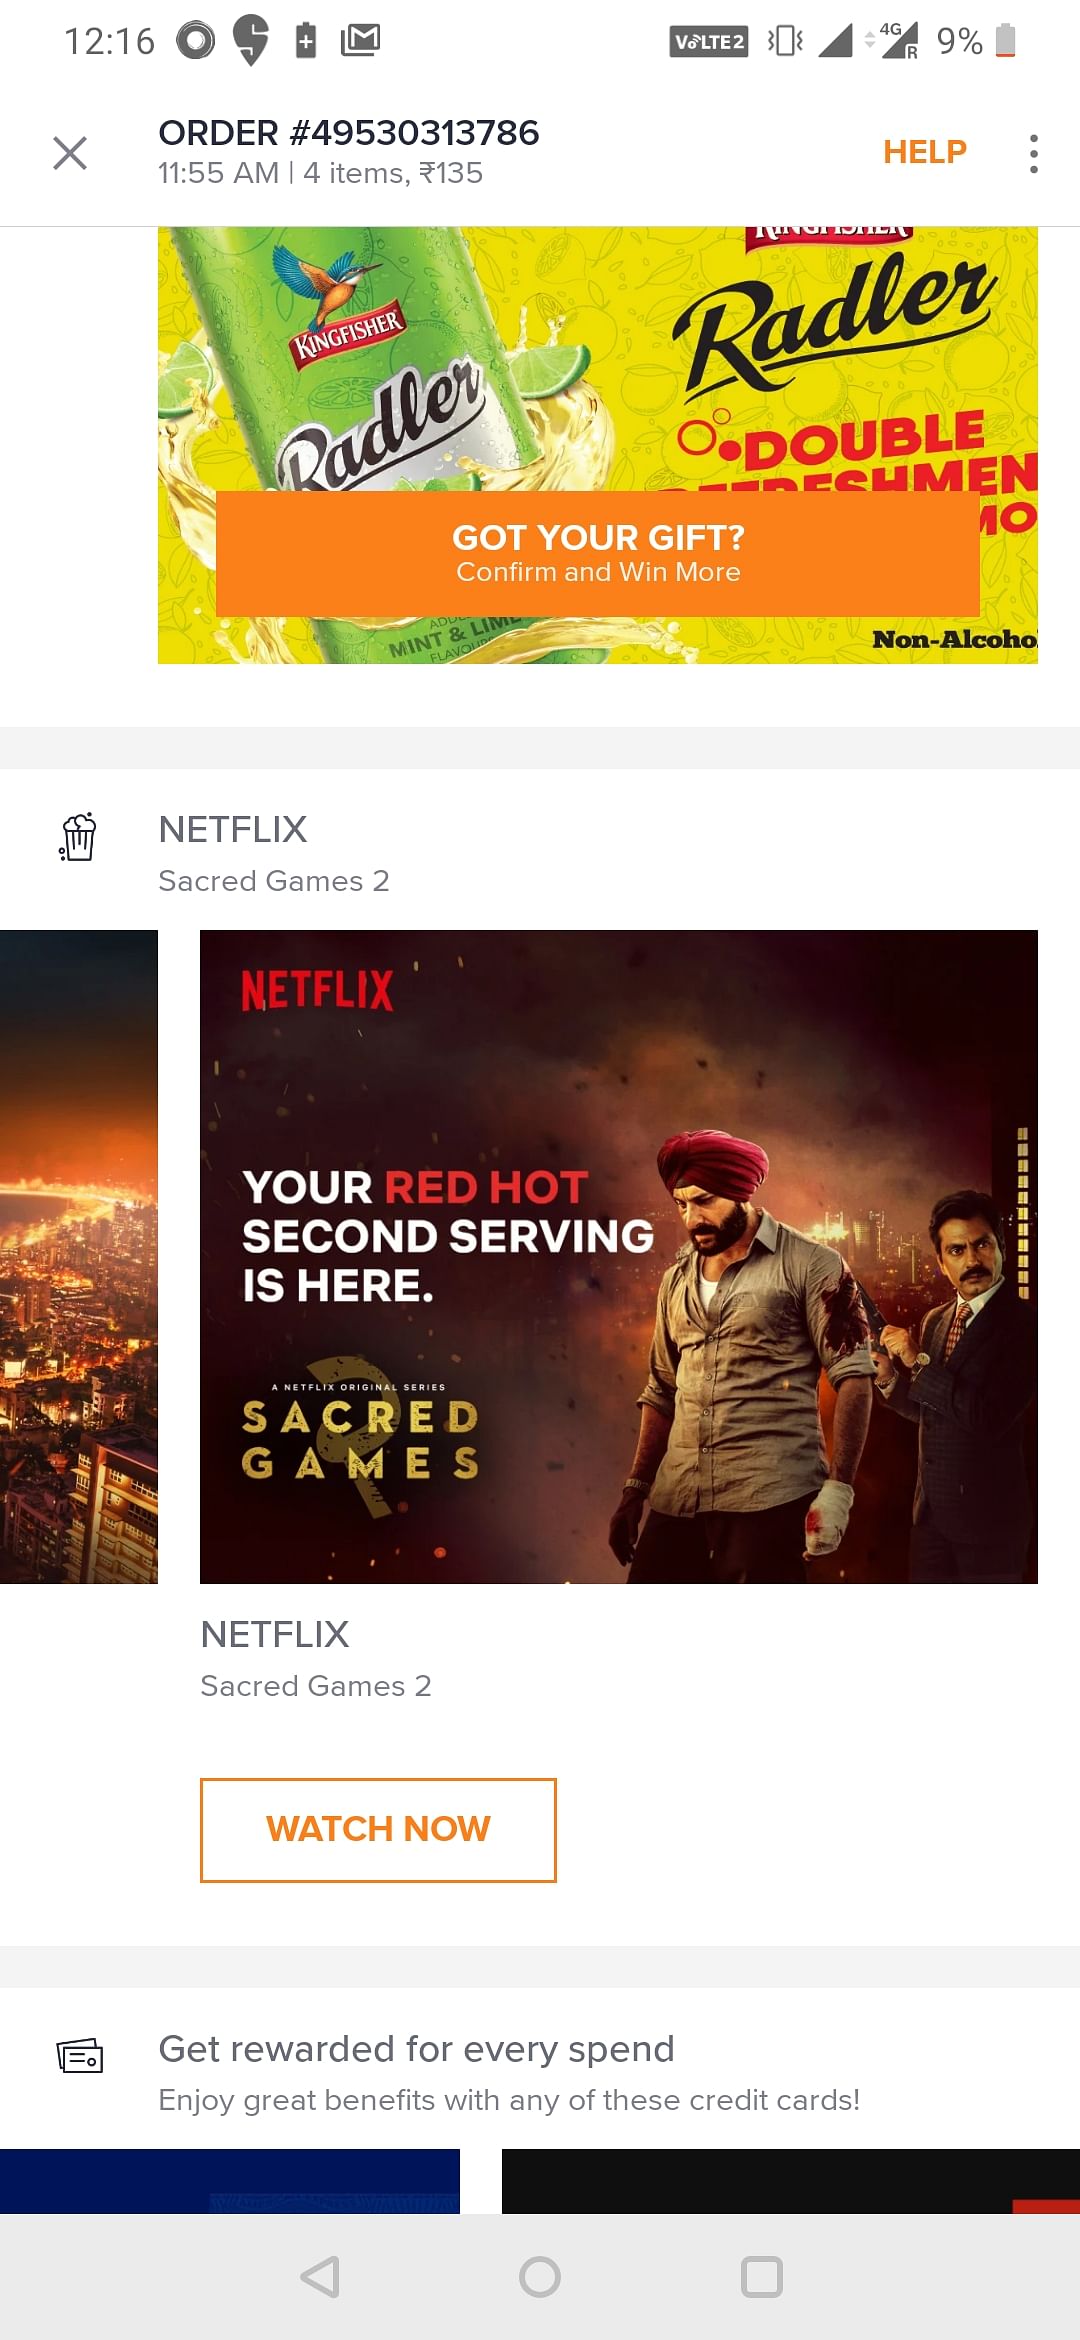 Swiggy displays Netflix's ad for Sacred Games 